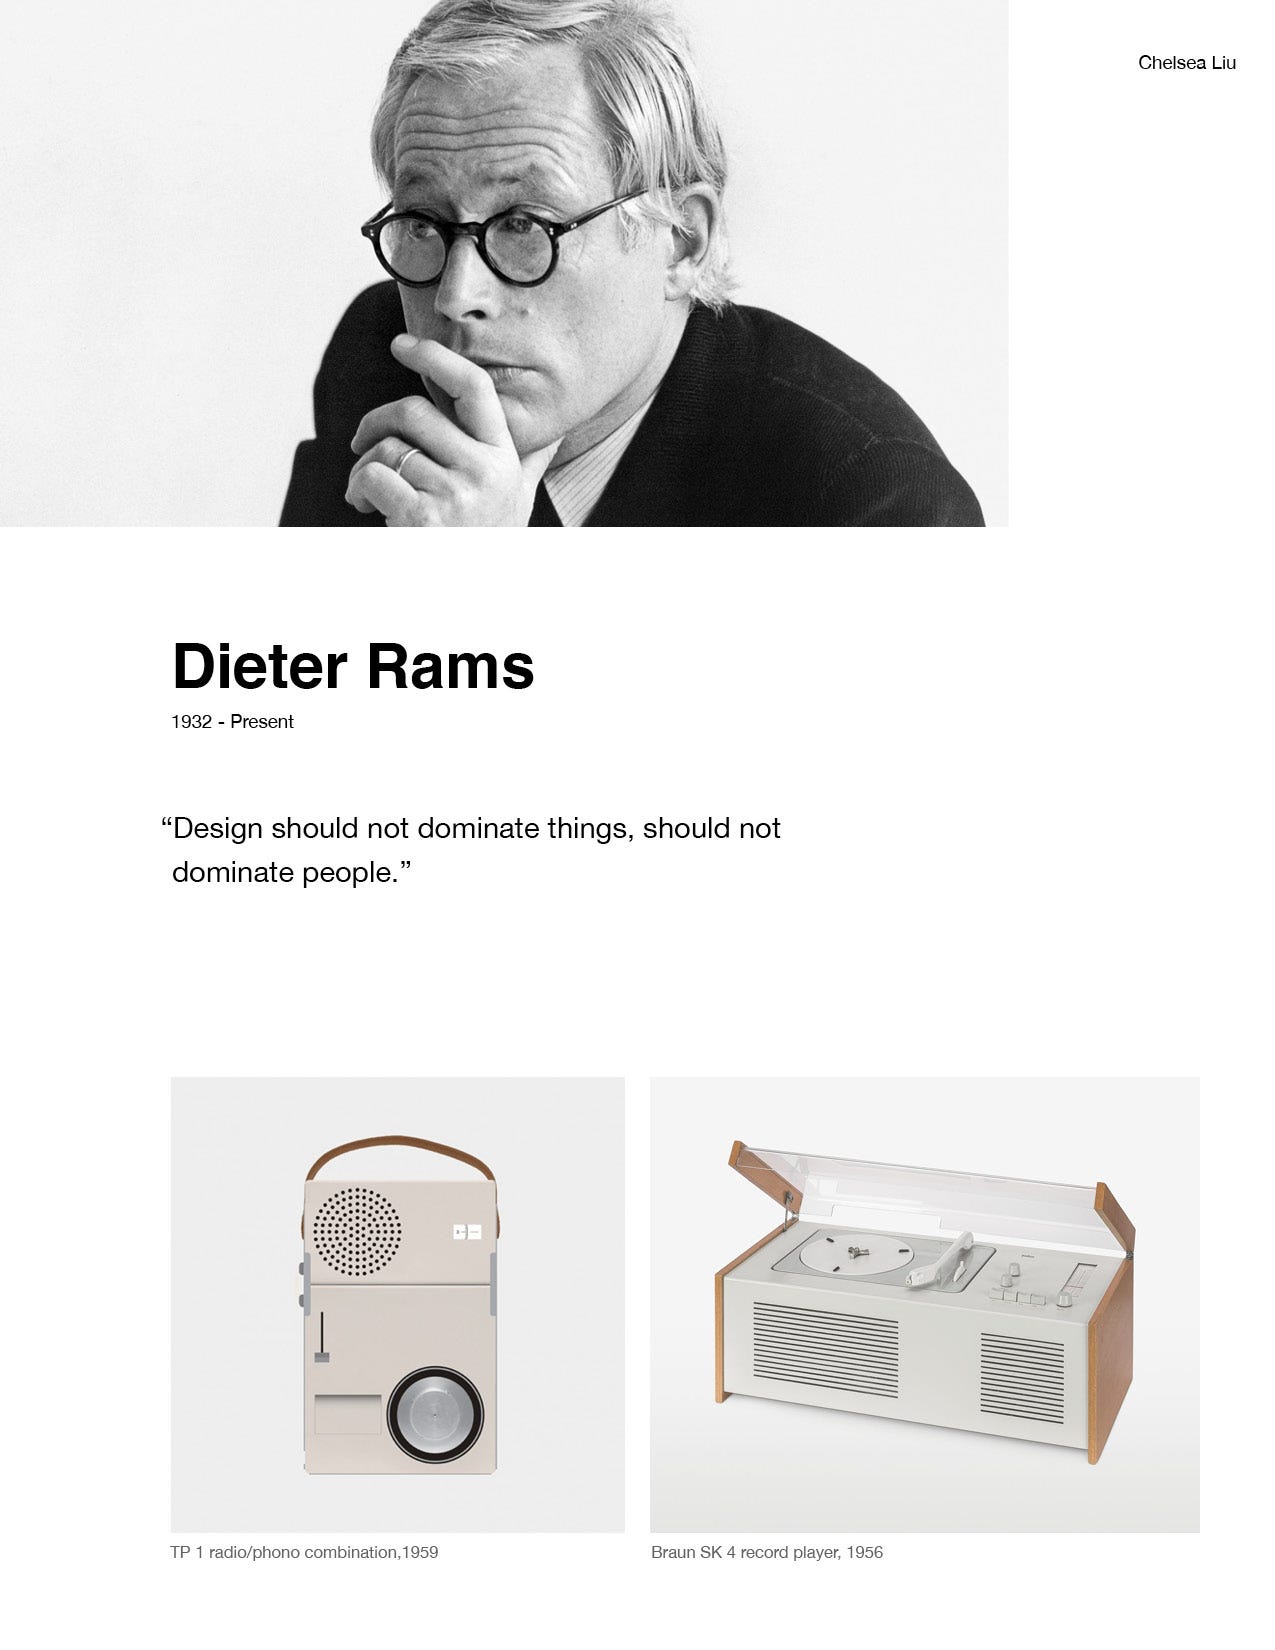 Dieter Rams Poster. Design Hero Part 1 | by Chelsea Liu | Medium